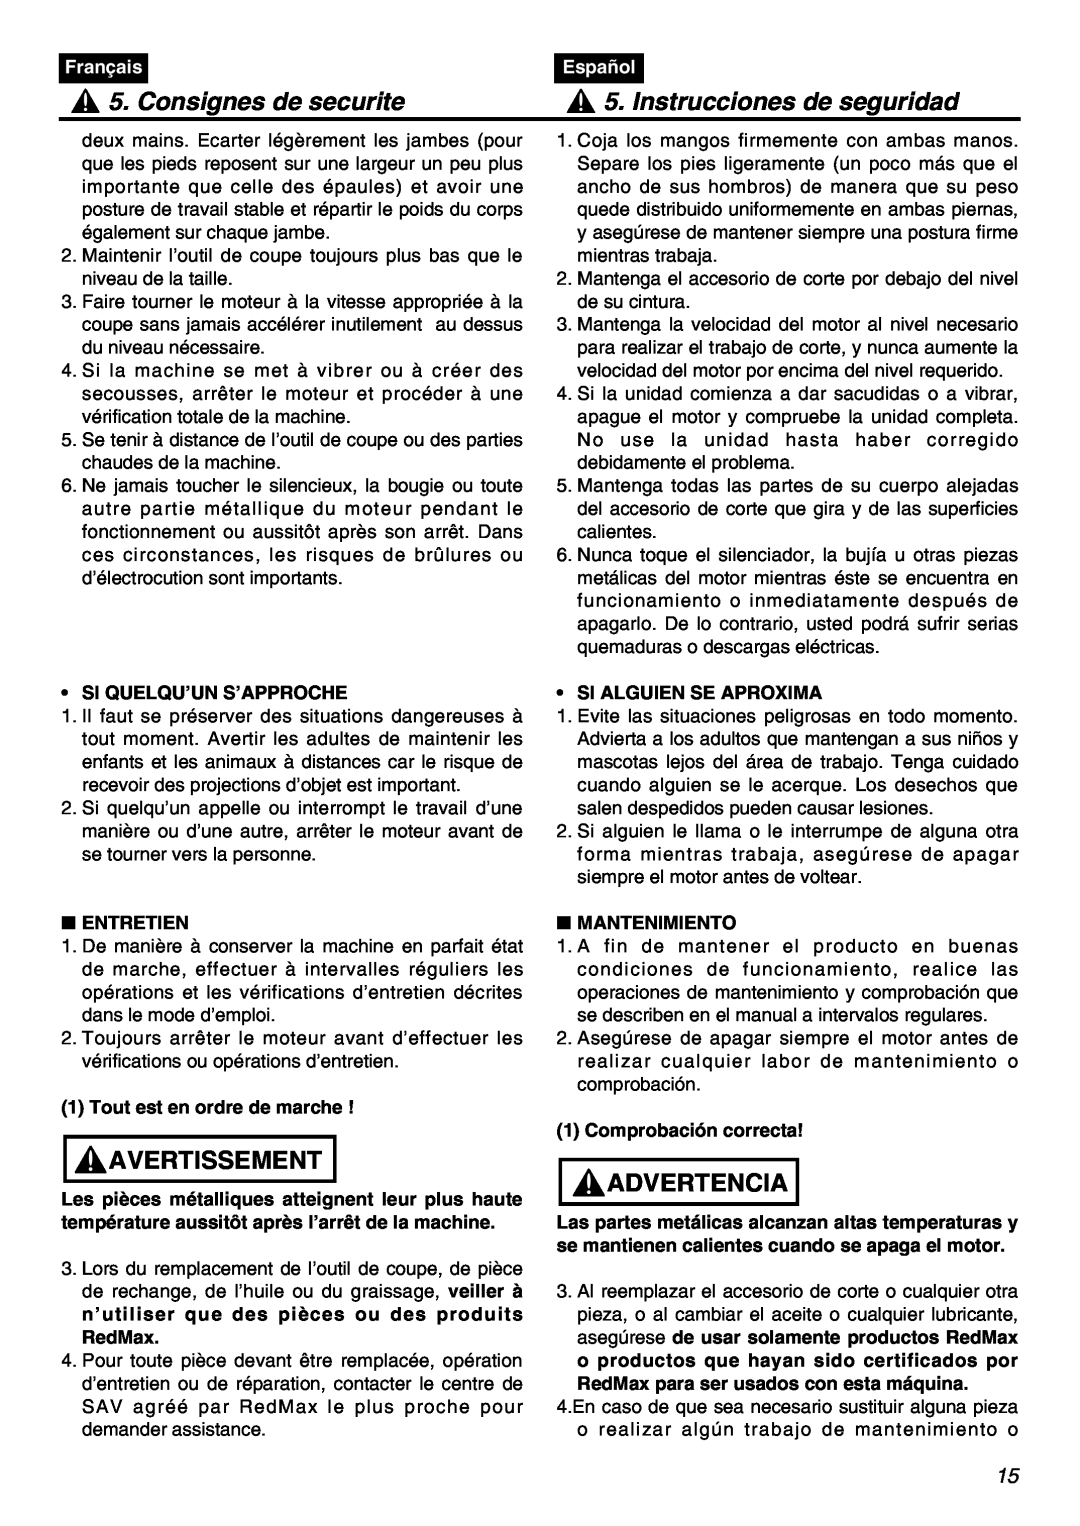 RedMax BCZ2401S-CA manual Consignes de securite, Instrucciones de seguridad, Avertissement, Advertencia, Français, Español 